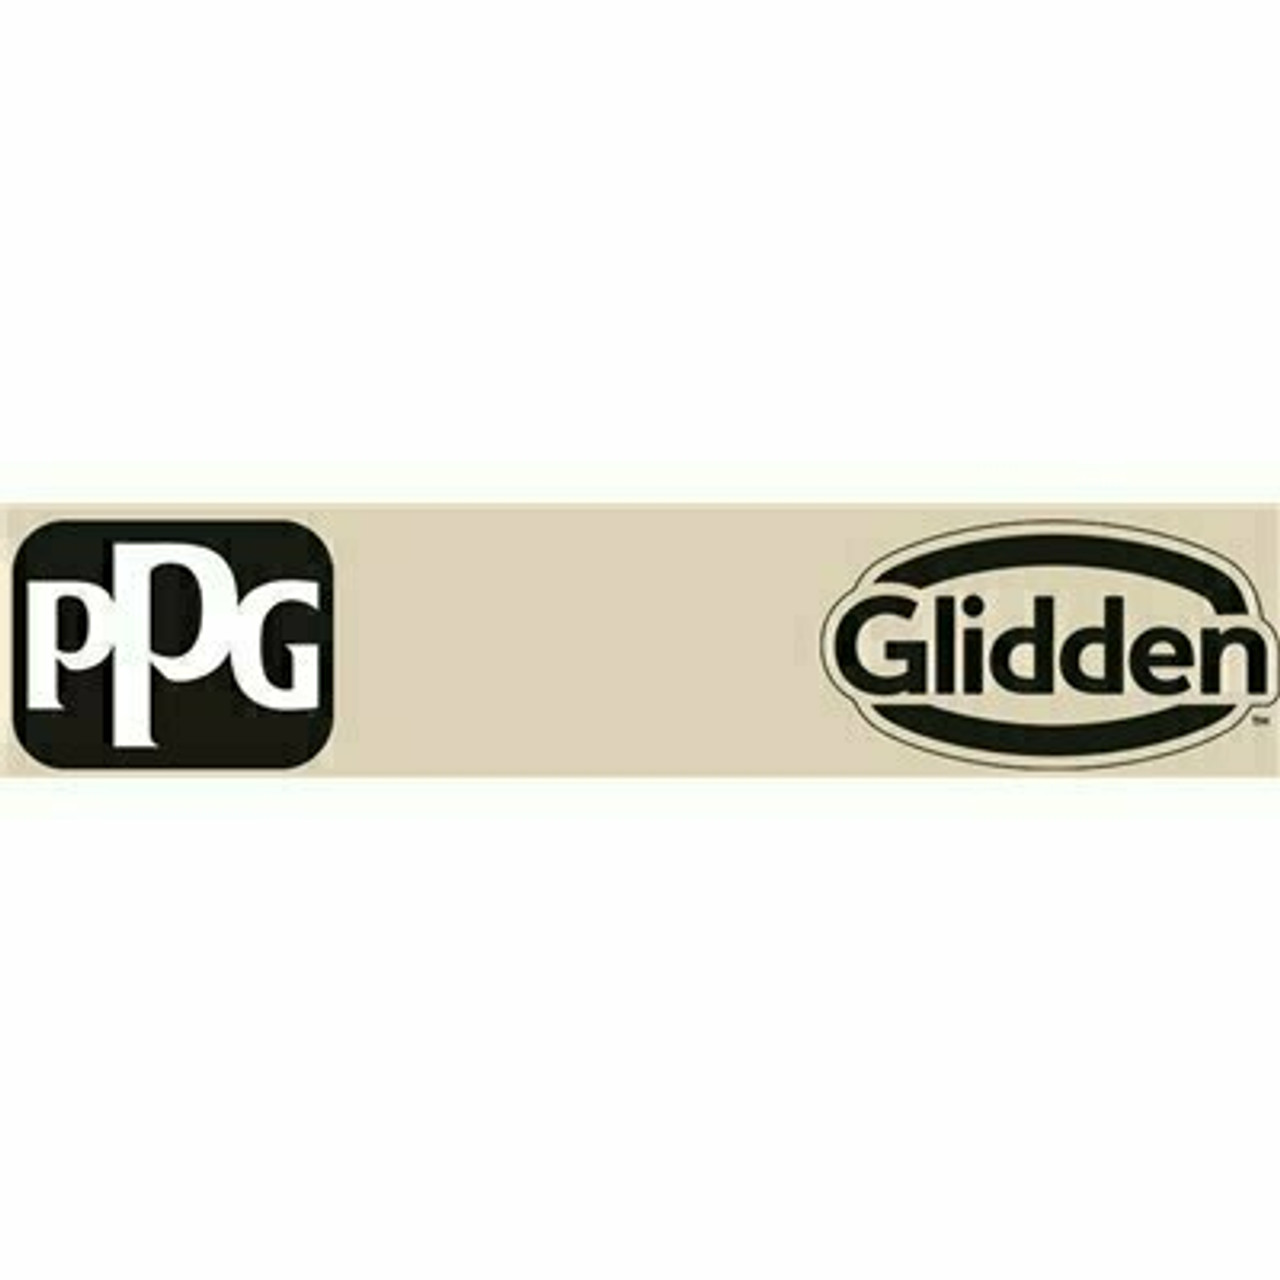 Glidden Premium 1 Gal. #Ppg1097-3 Toasted Almond Satin Exterior Latex Paint